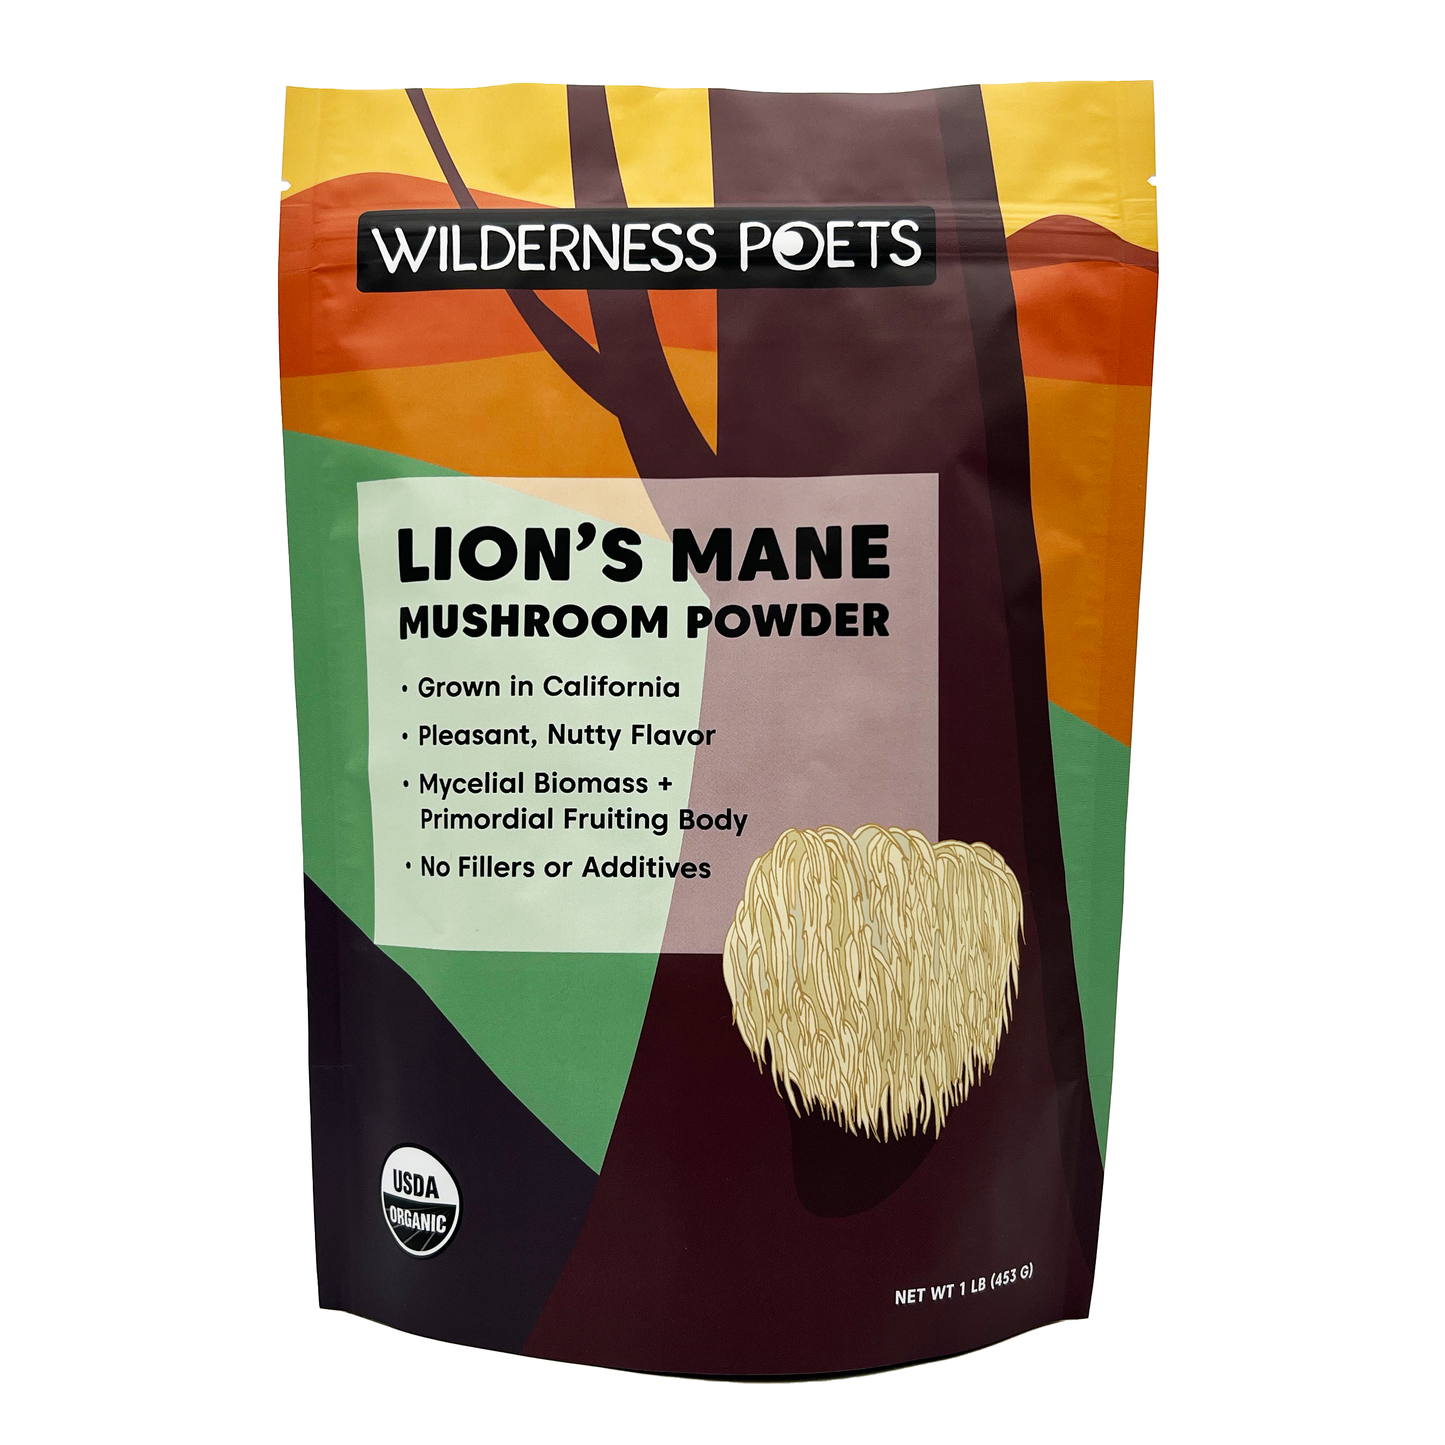 Lion's Mane Mushroom Powder - California Grown, Organic